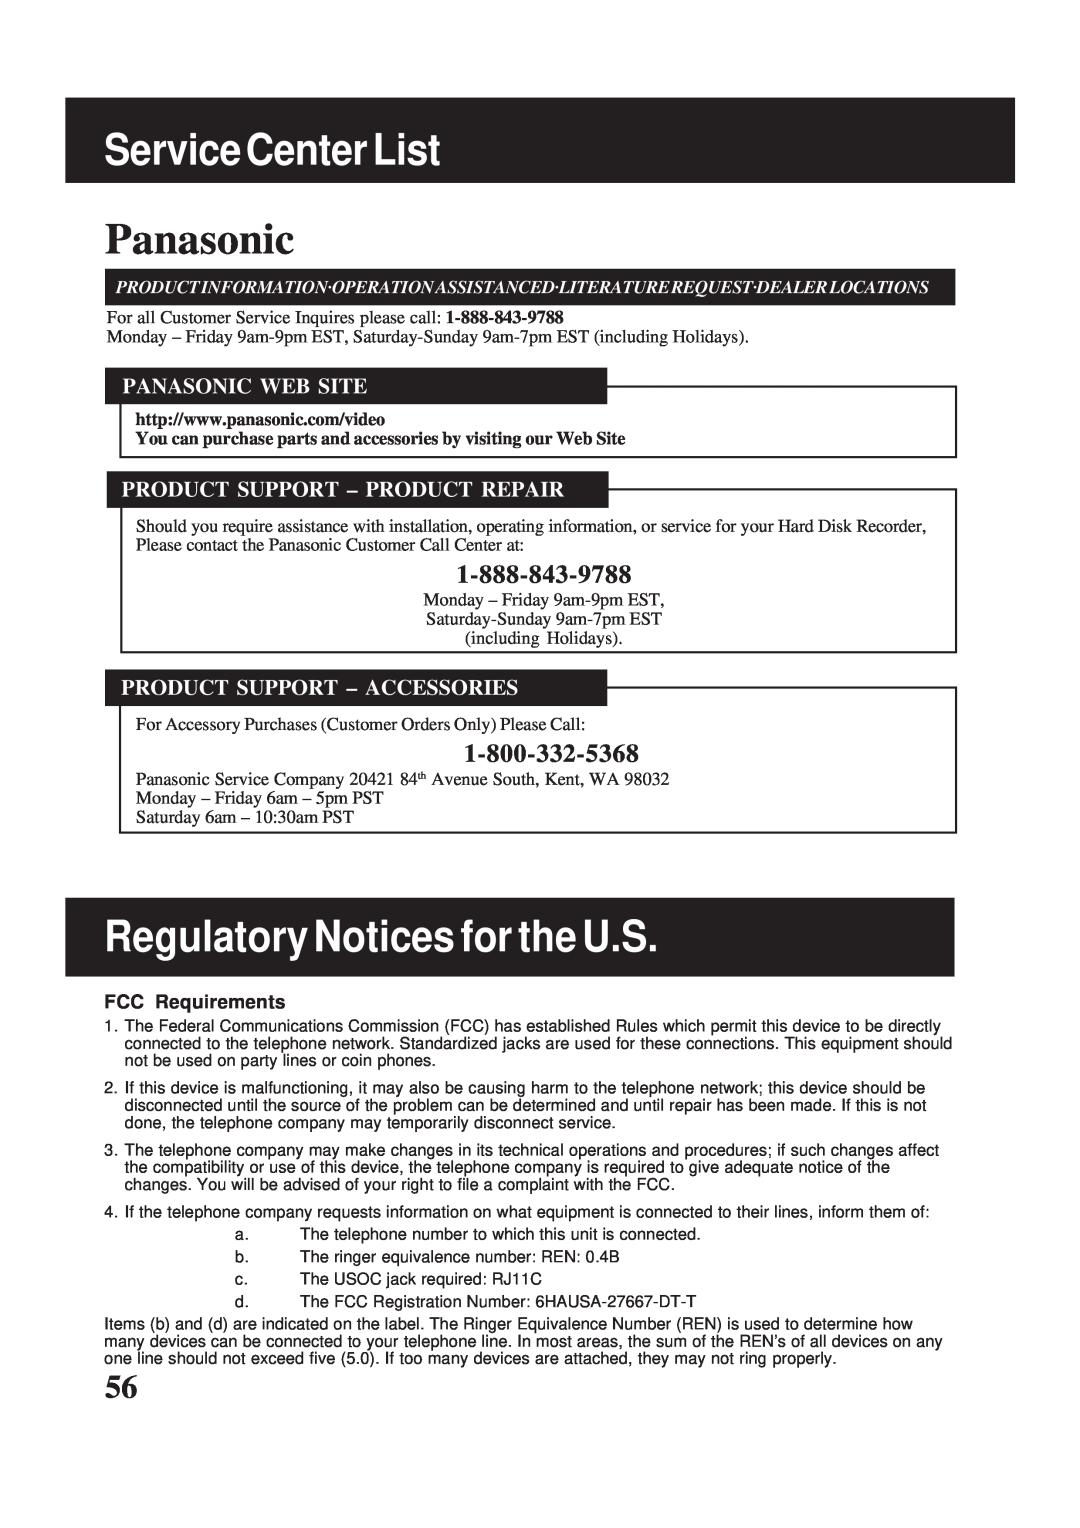 Panasonic PV-HS2000 Service Center List, Regulatory Notices for the U.S, Panasonic Web Site, FCC Requirements 